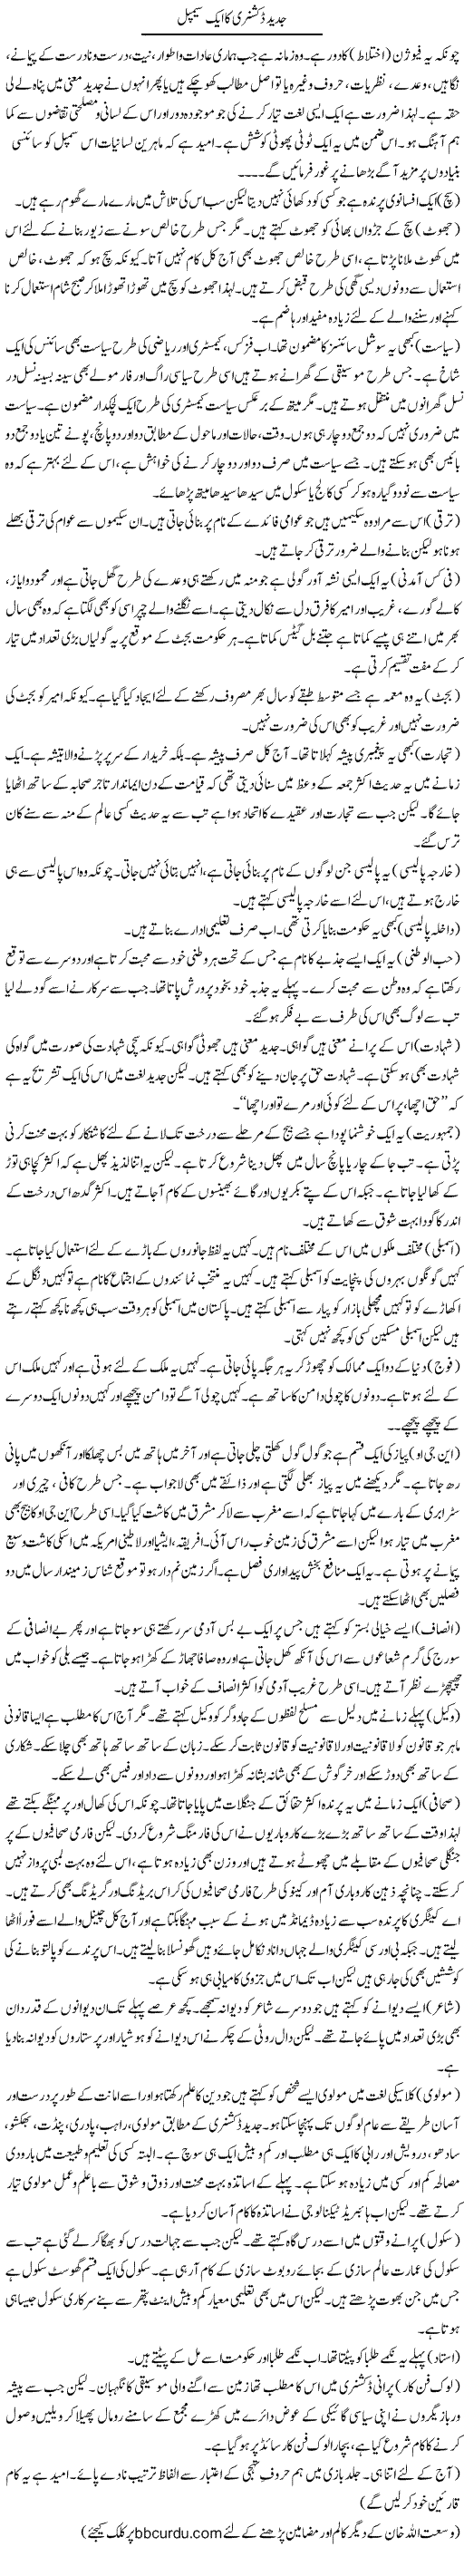 Jadeed Dictionary Ka Aik Sample | Wusat Ullah Khan | Daily Urdu Columns